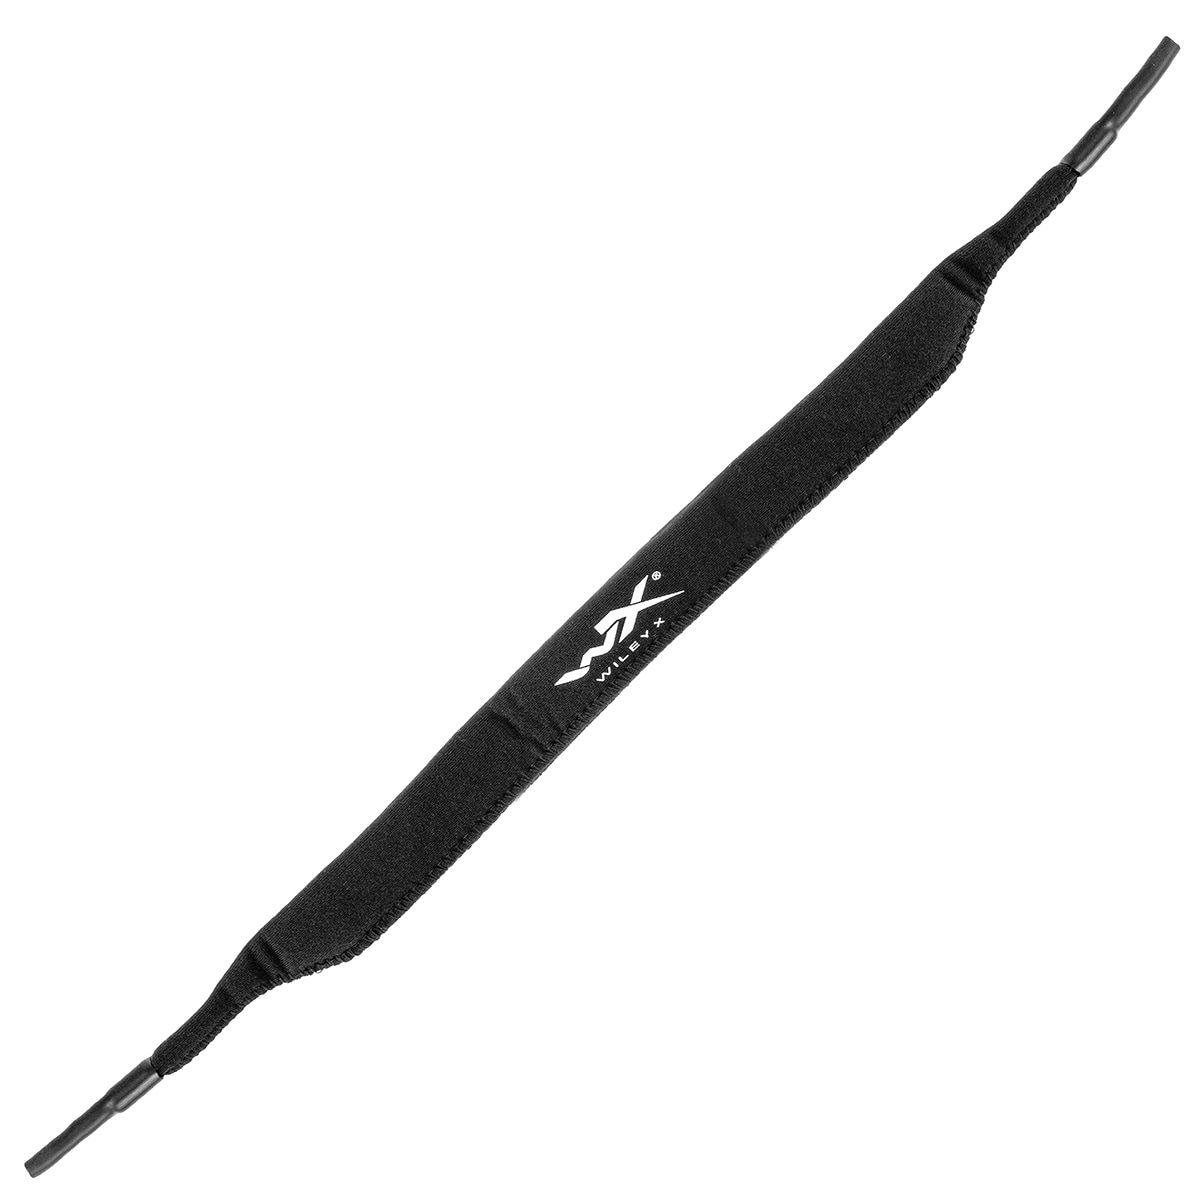 Pasek Wiley X Floating Leash Cord do okularów - Black
